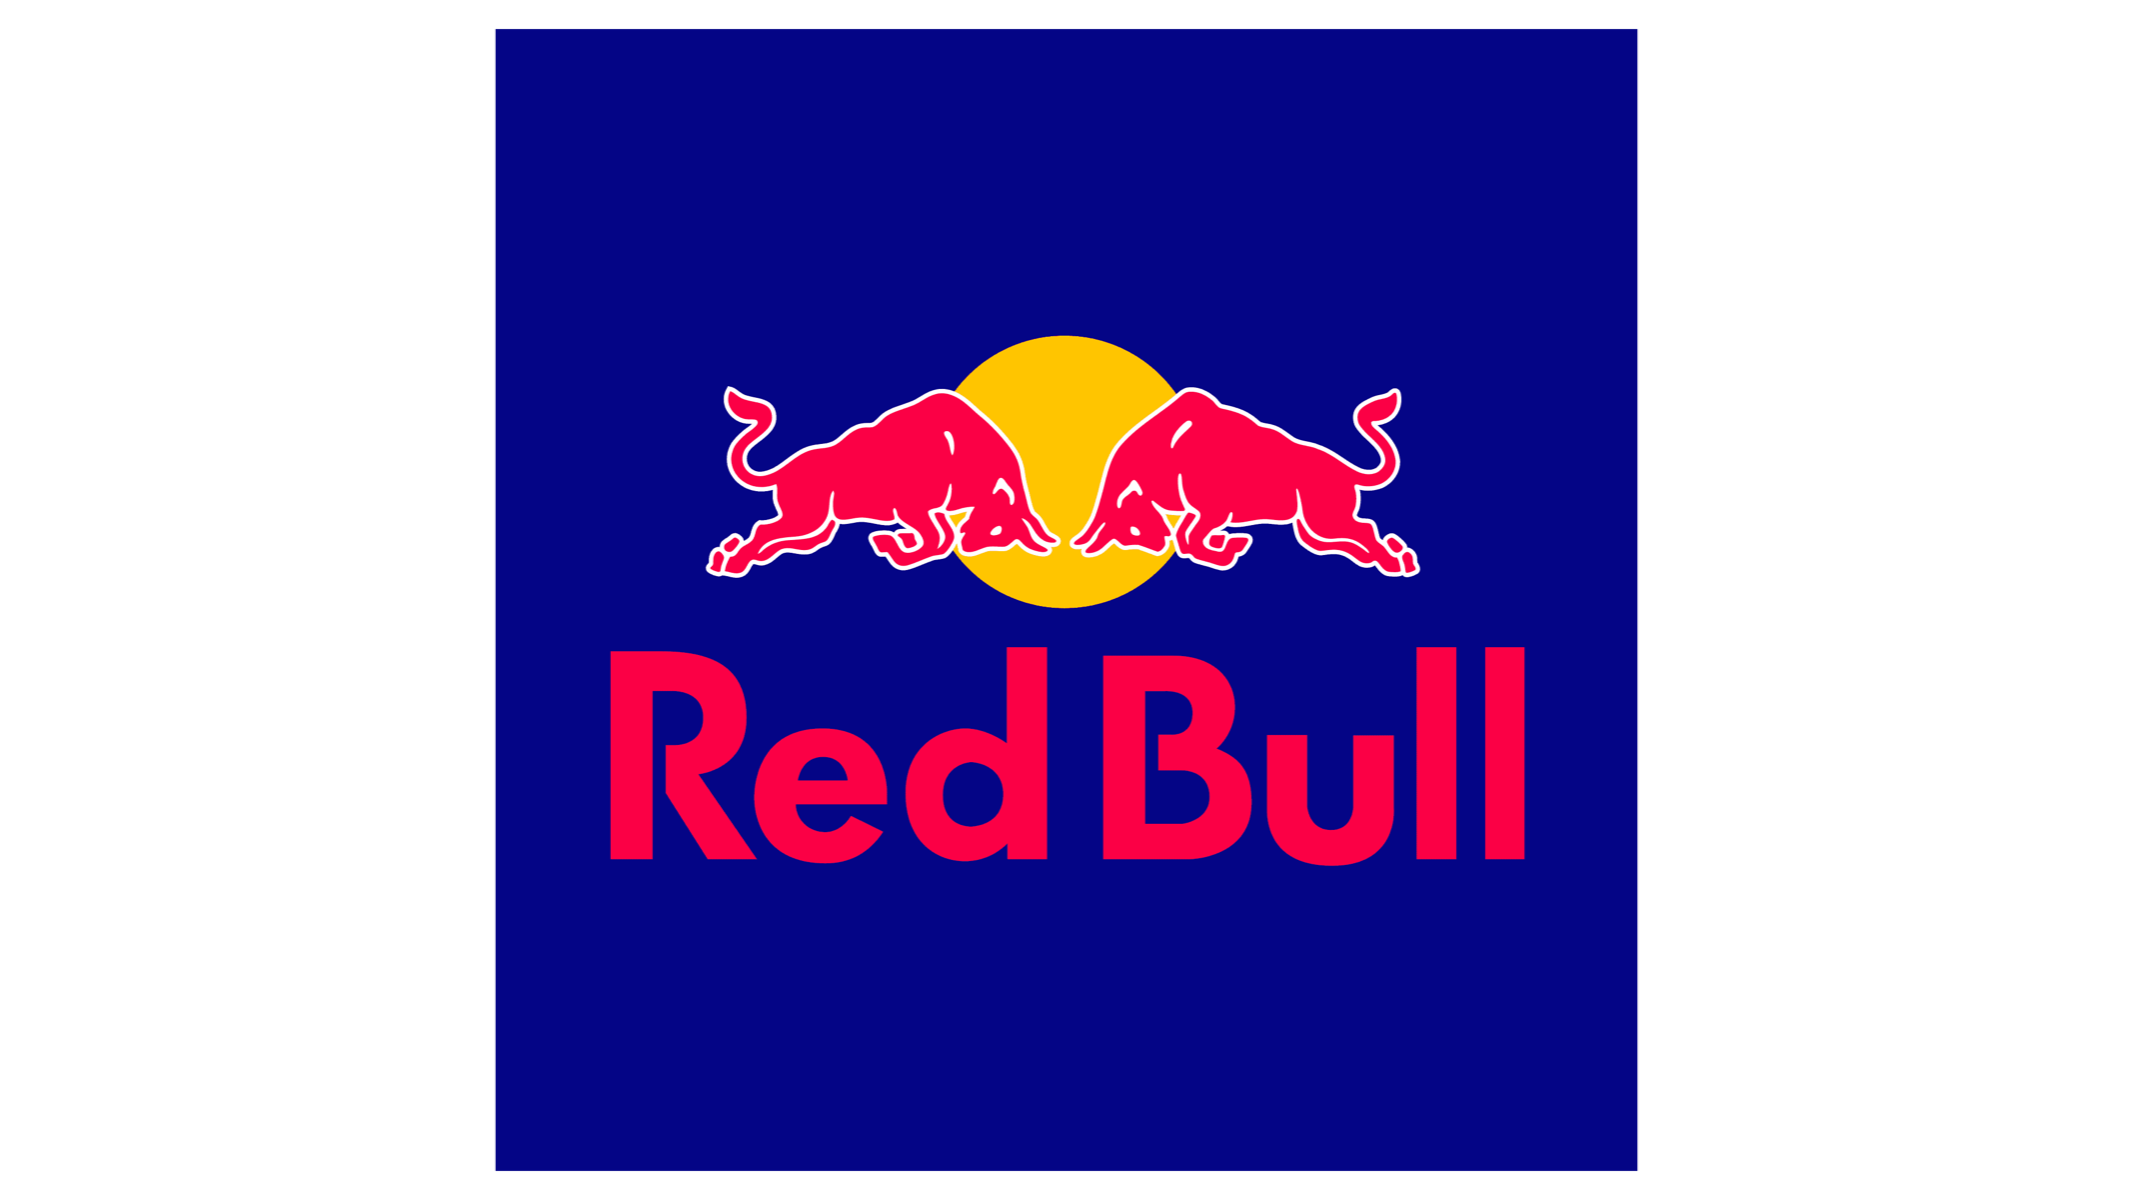 Red bull emblema